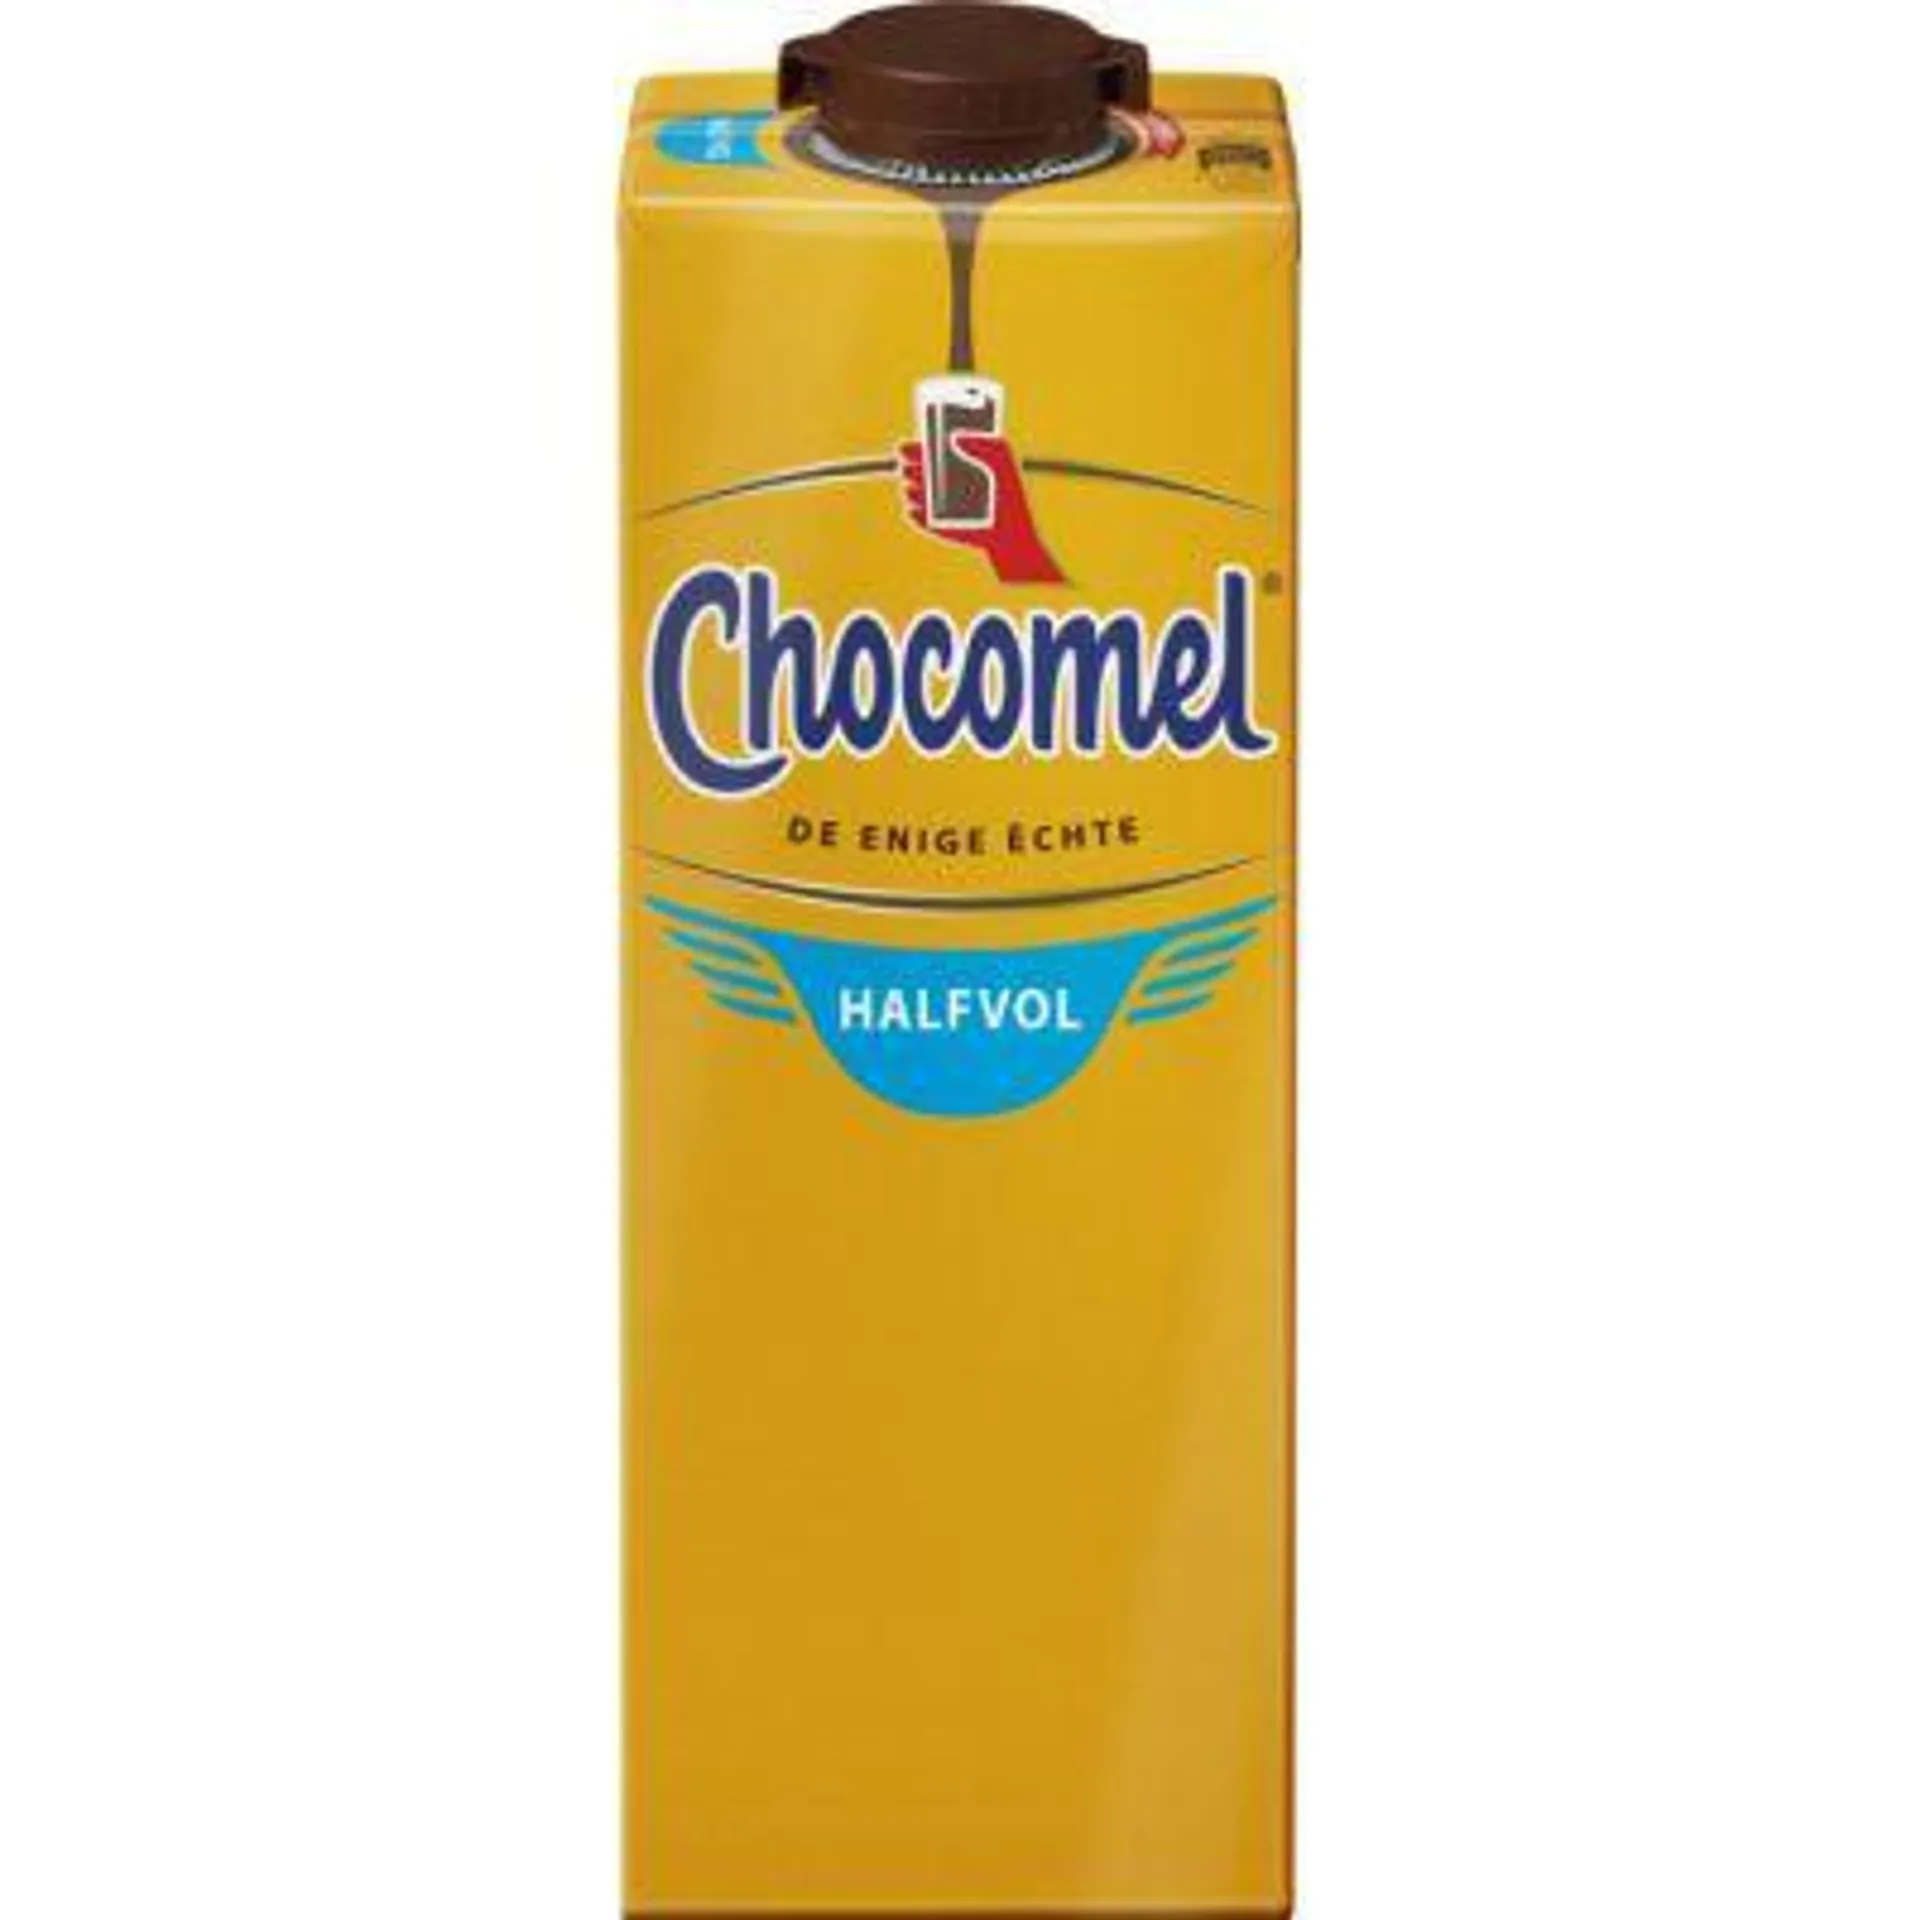 Chocomel Halfvol